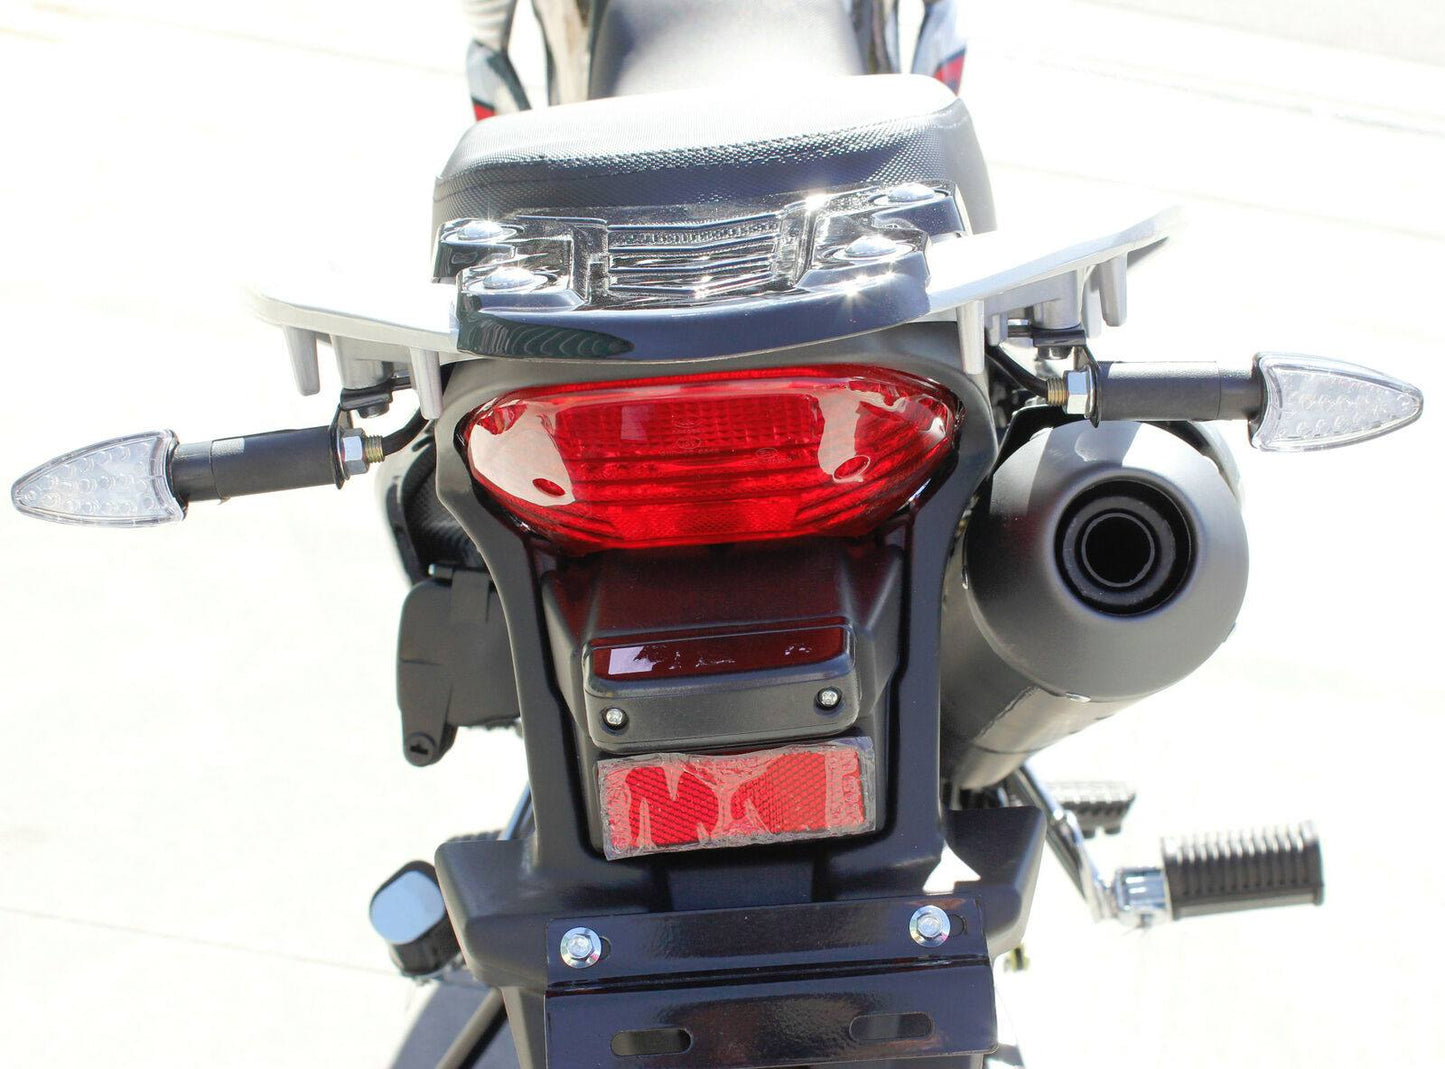 TDR Red XVW300 300cc Off Road Dirt Bike - TDRMOTO